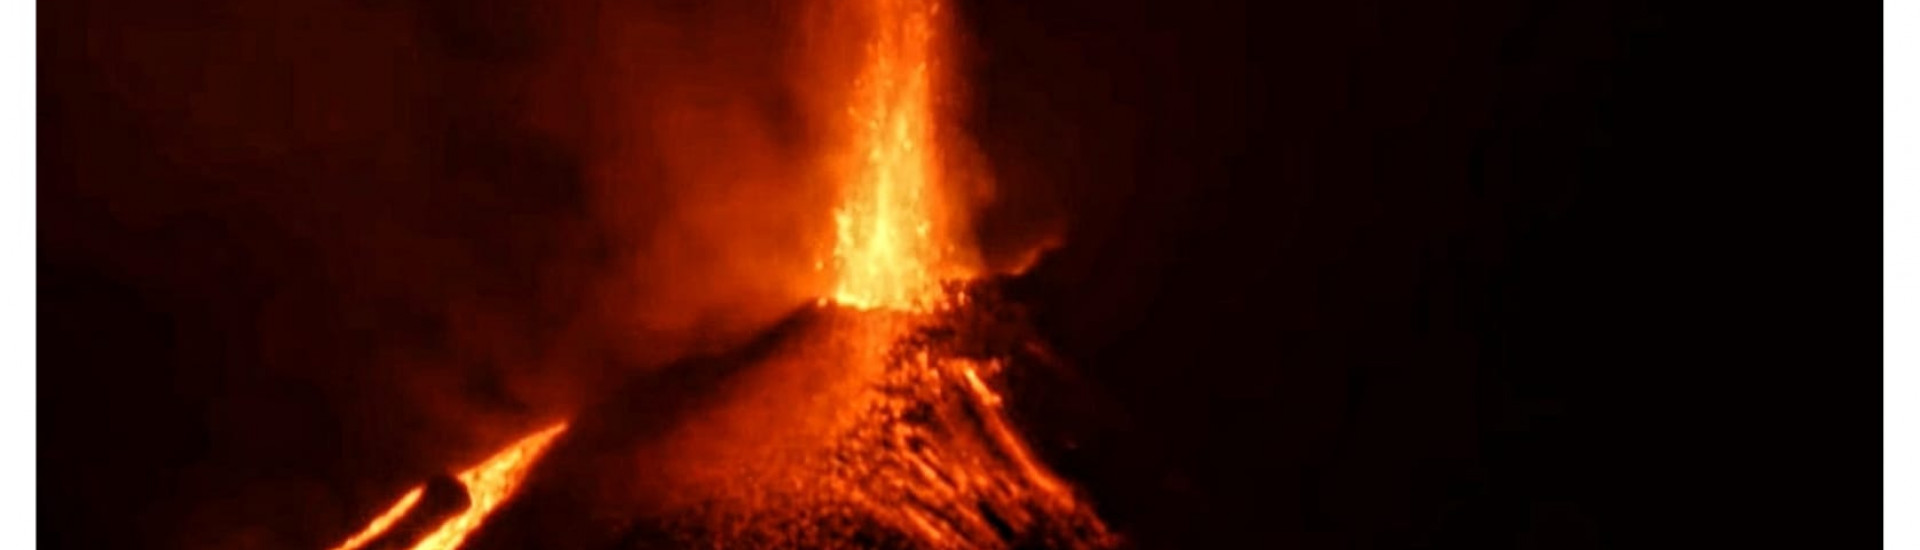 Vulkaanuitbarsting op La Palma